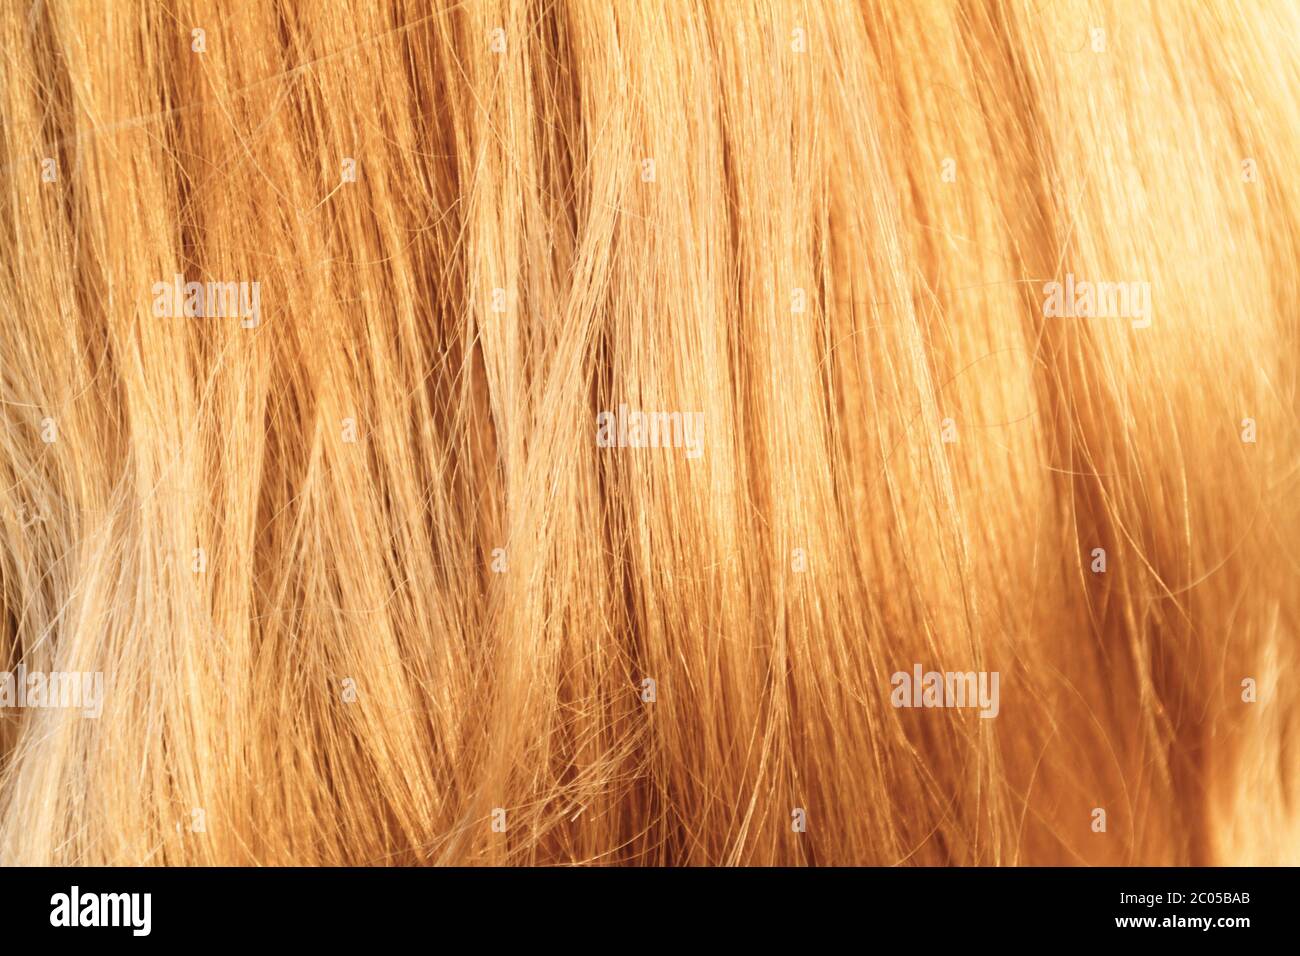 Capelli biondi. Texture capelli biondi - foto closeup Foto Stock